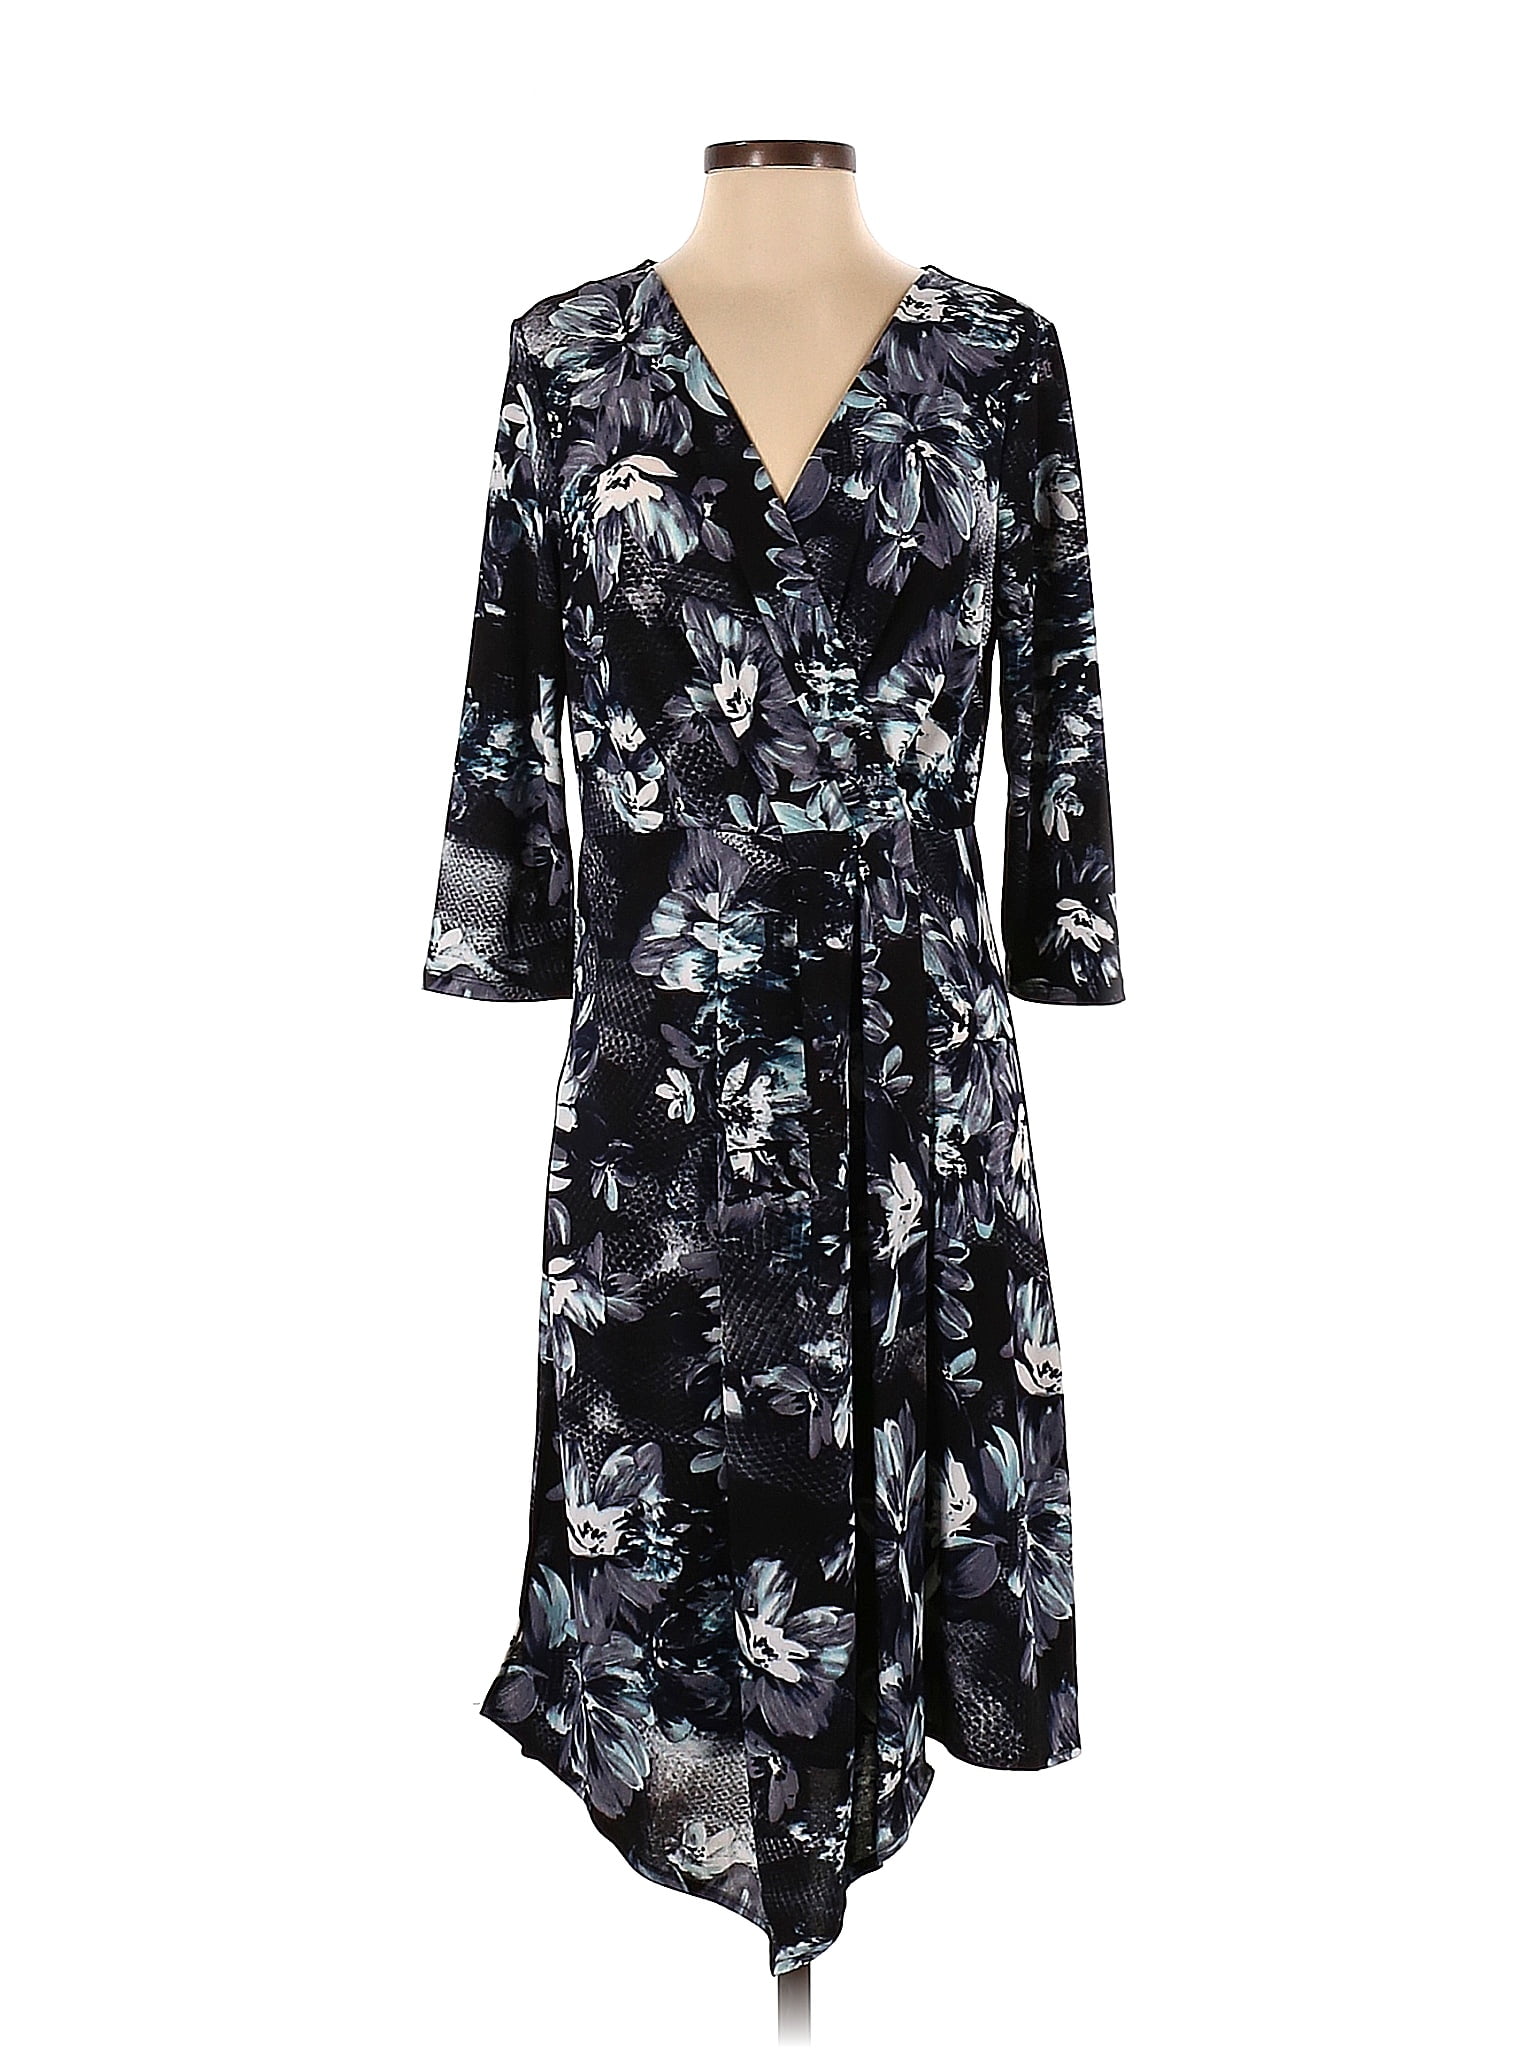 Simply Vera Vera Wang Floral Black Casual Dress Size S - 76% off | thredUP